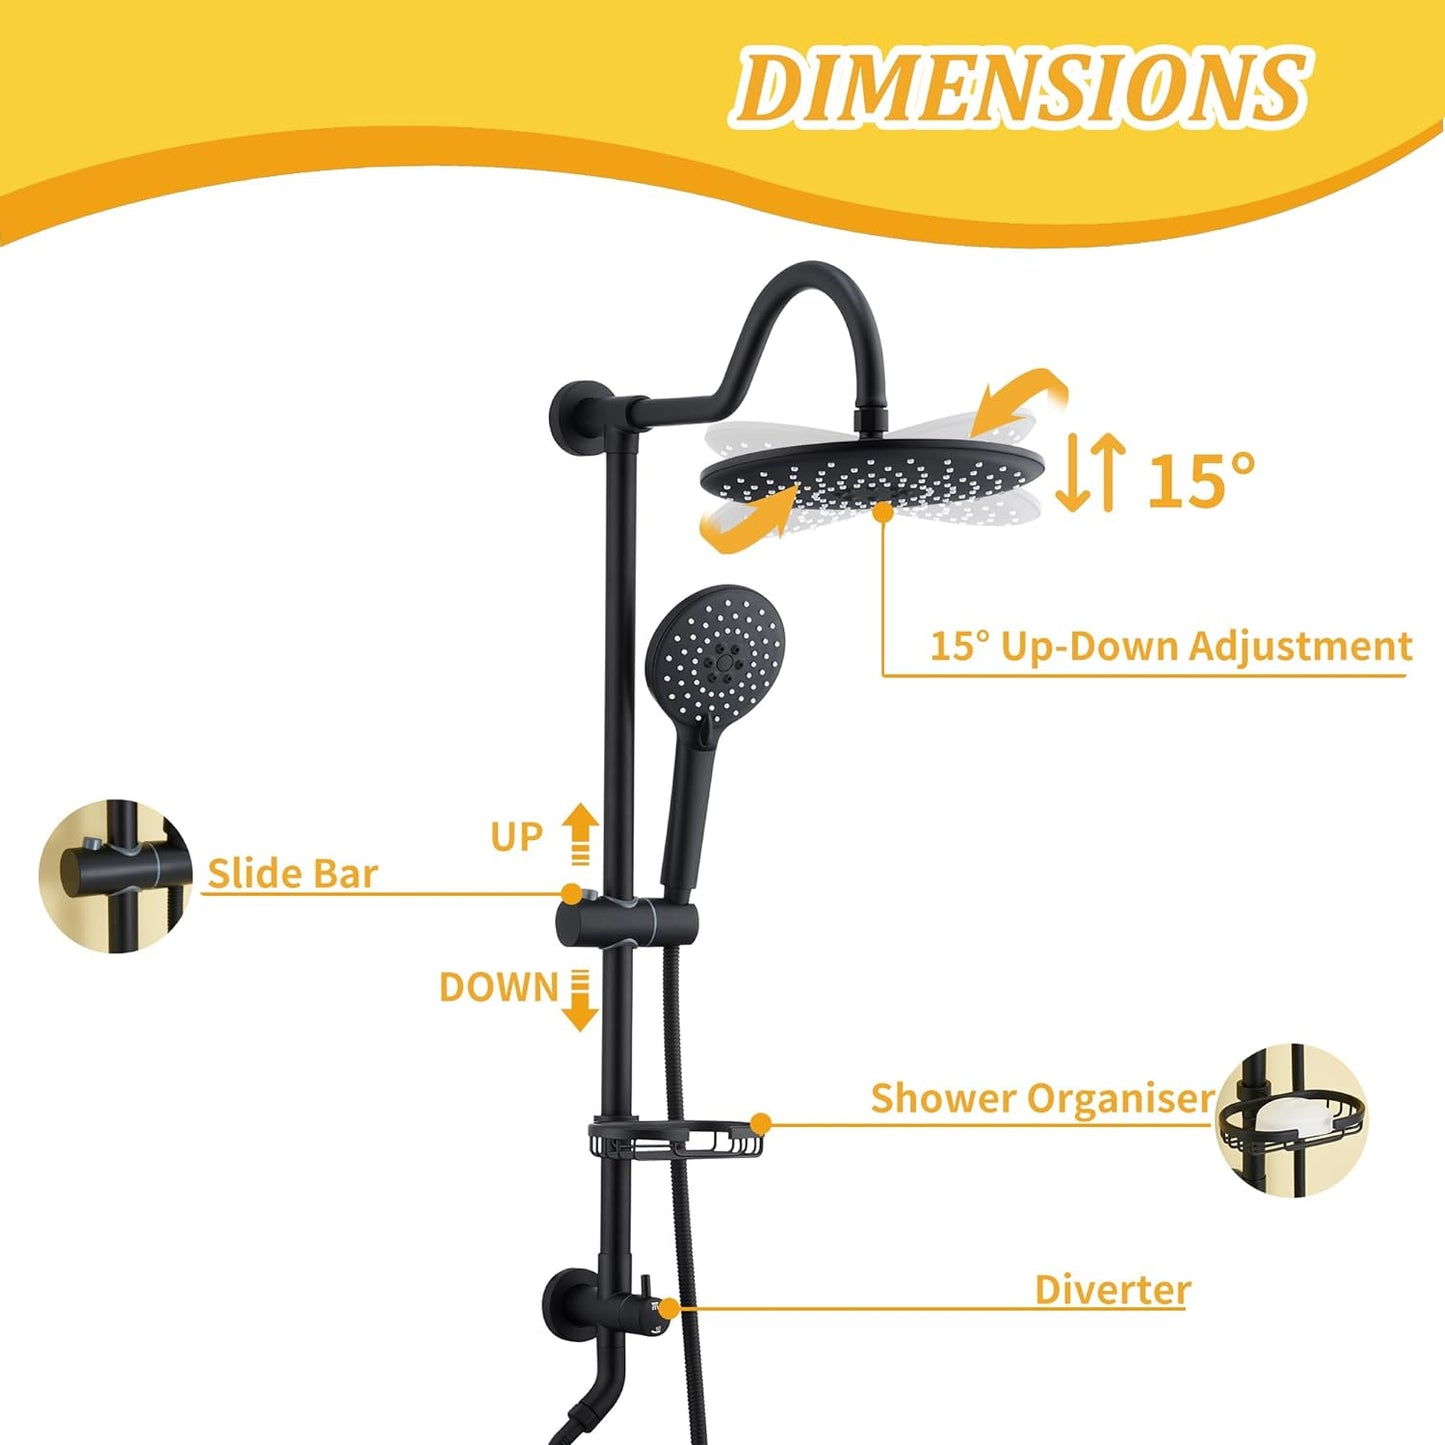 MONDAWE Exposed Shower System 8-Inch Matte Black Shower Head with Handheld Sprayer 3-Setting, Slid Bar Shower System